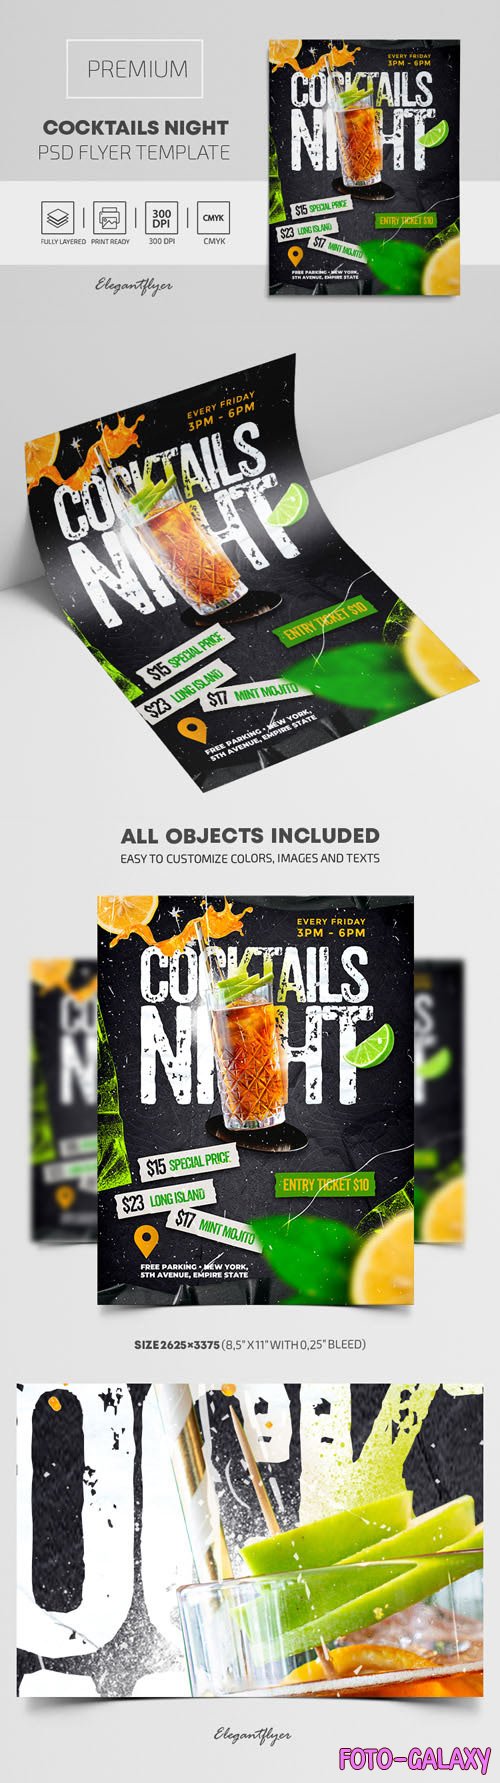 Cocktails Night Premium PSD Flyer Template